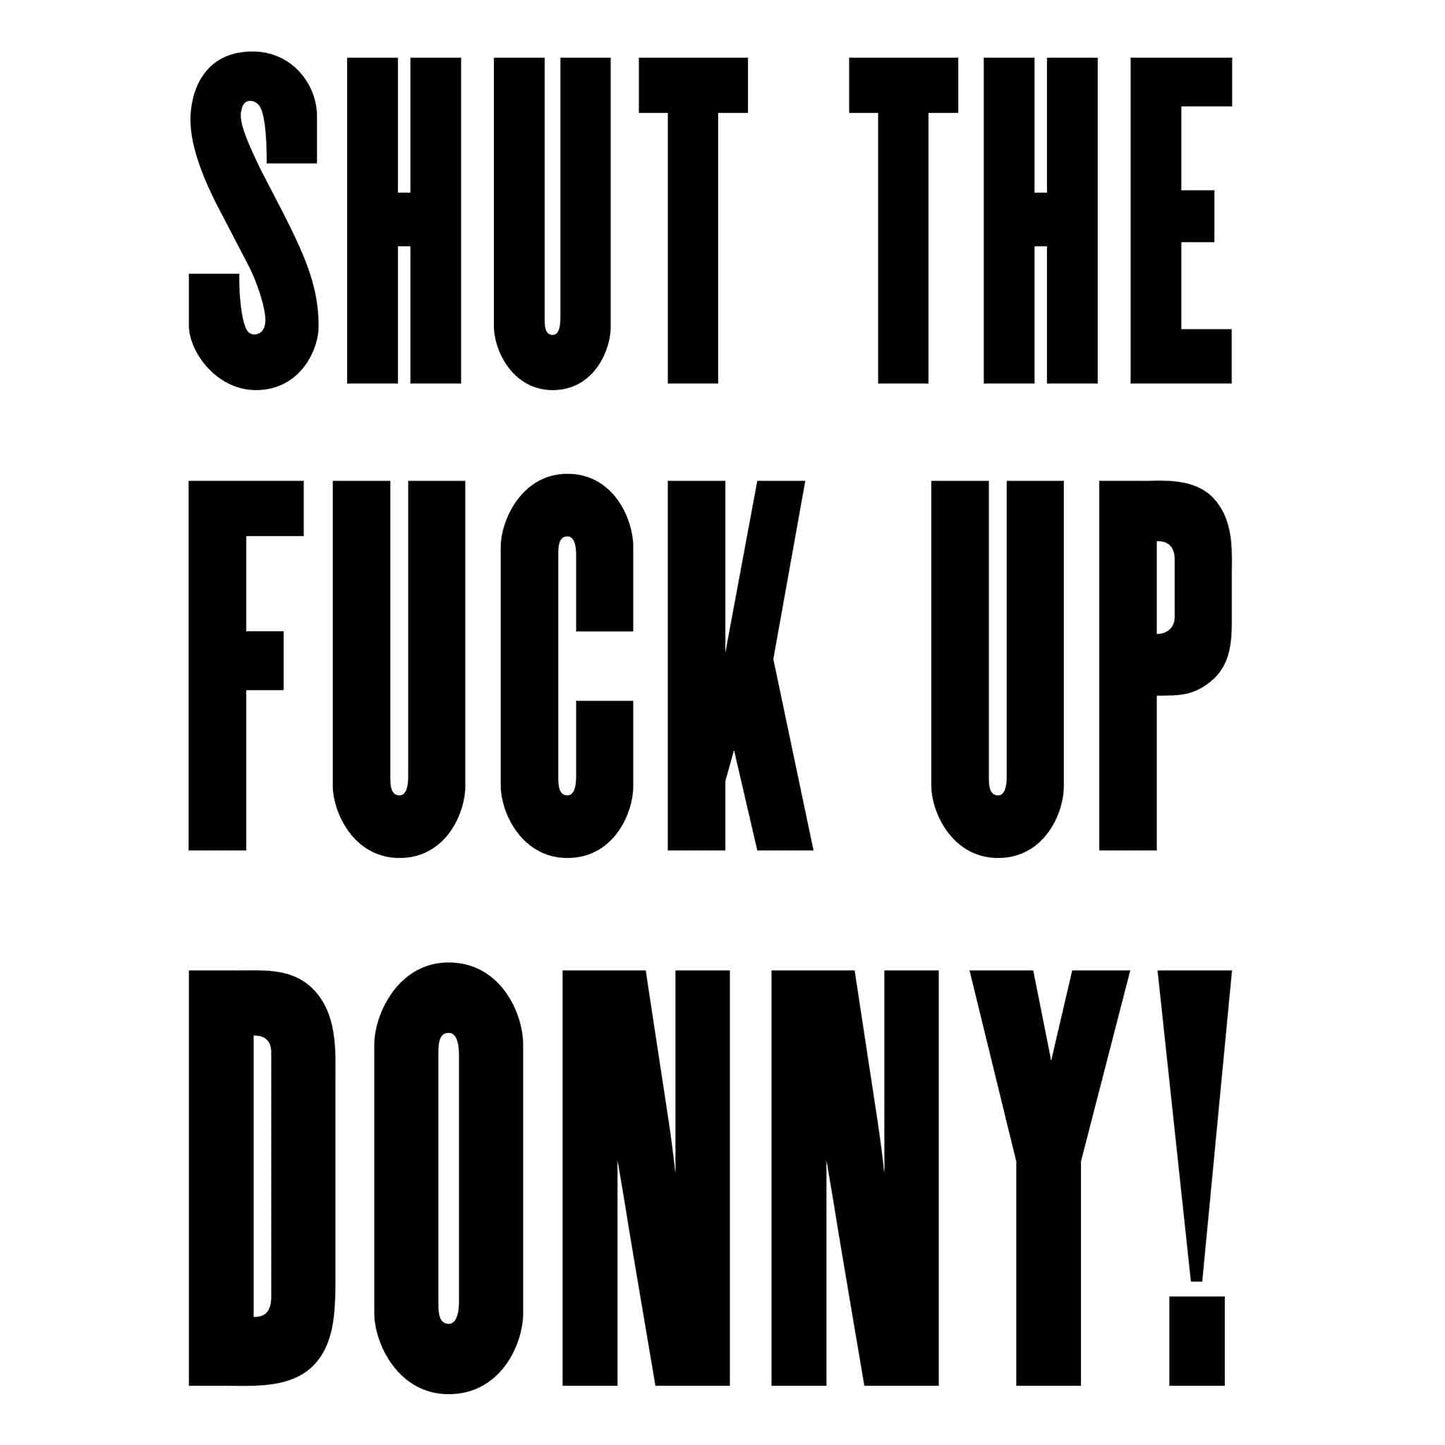 Shut The Fuck Up Donny! T-Shirt